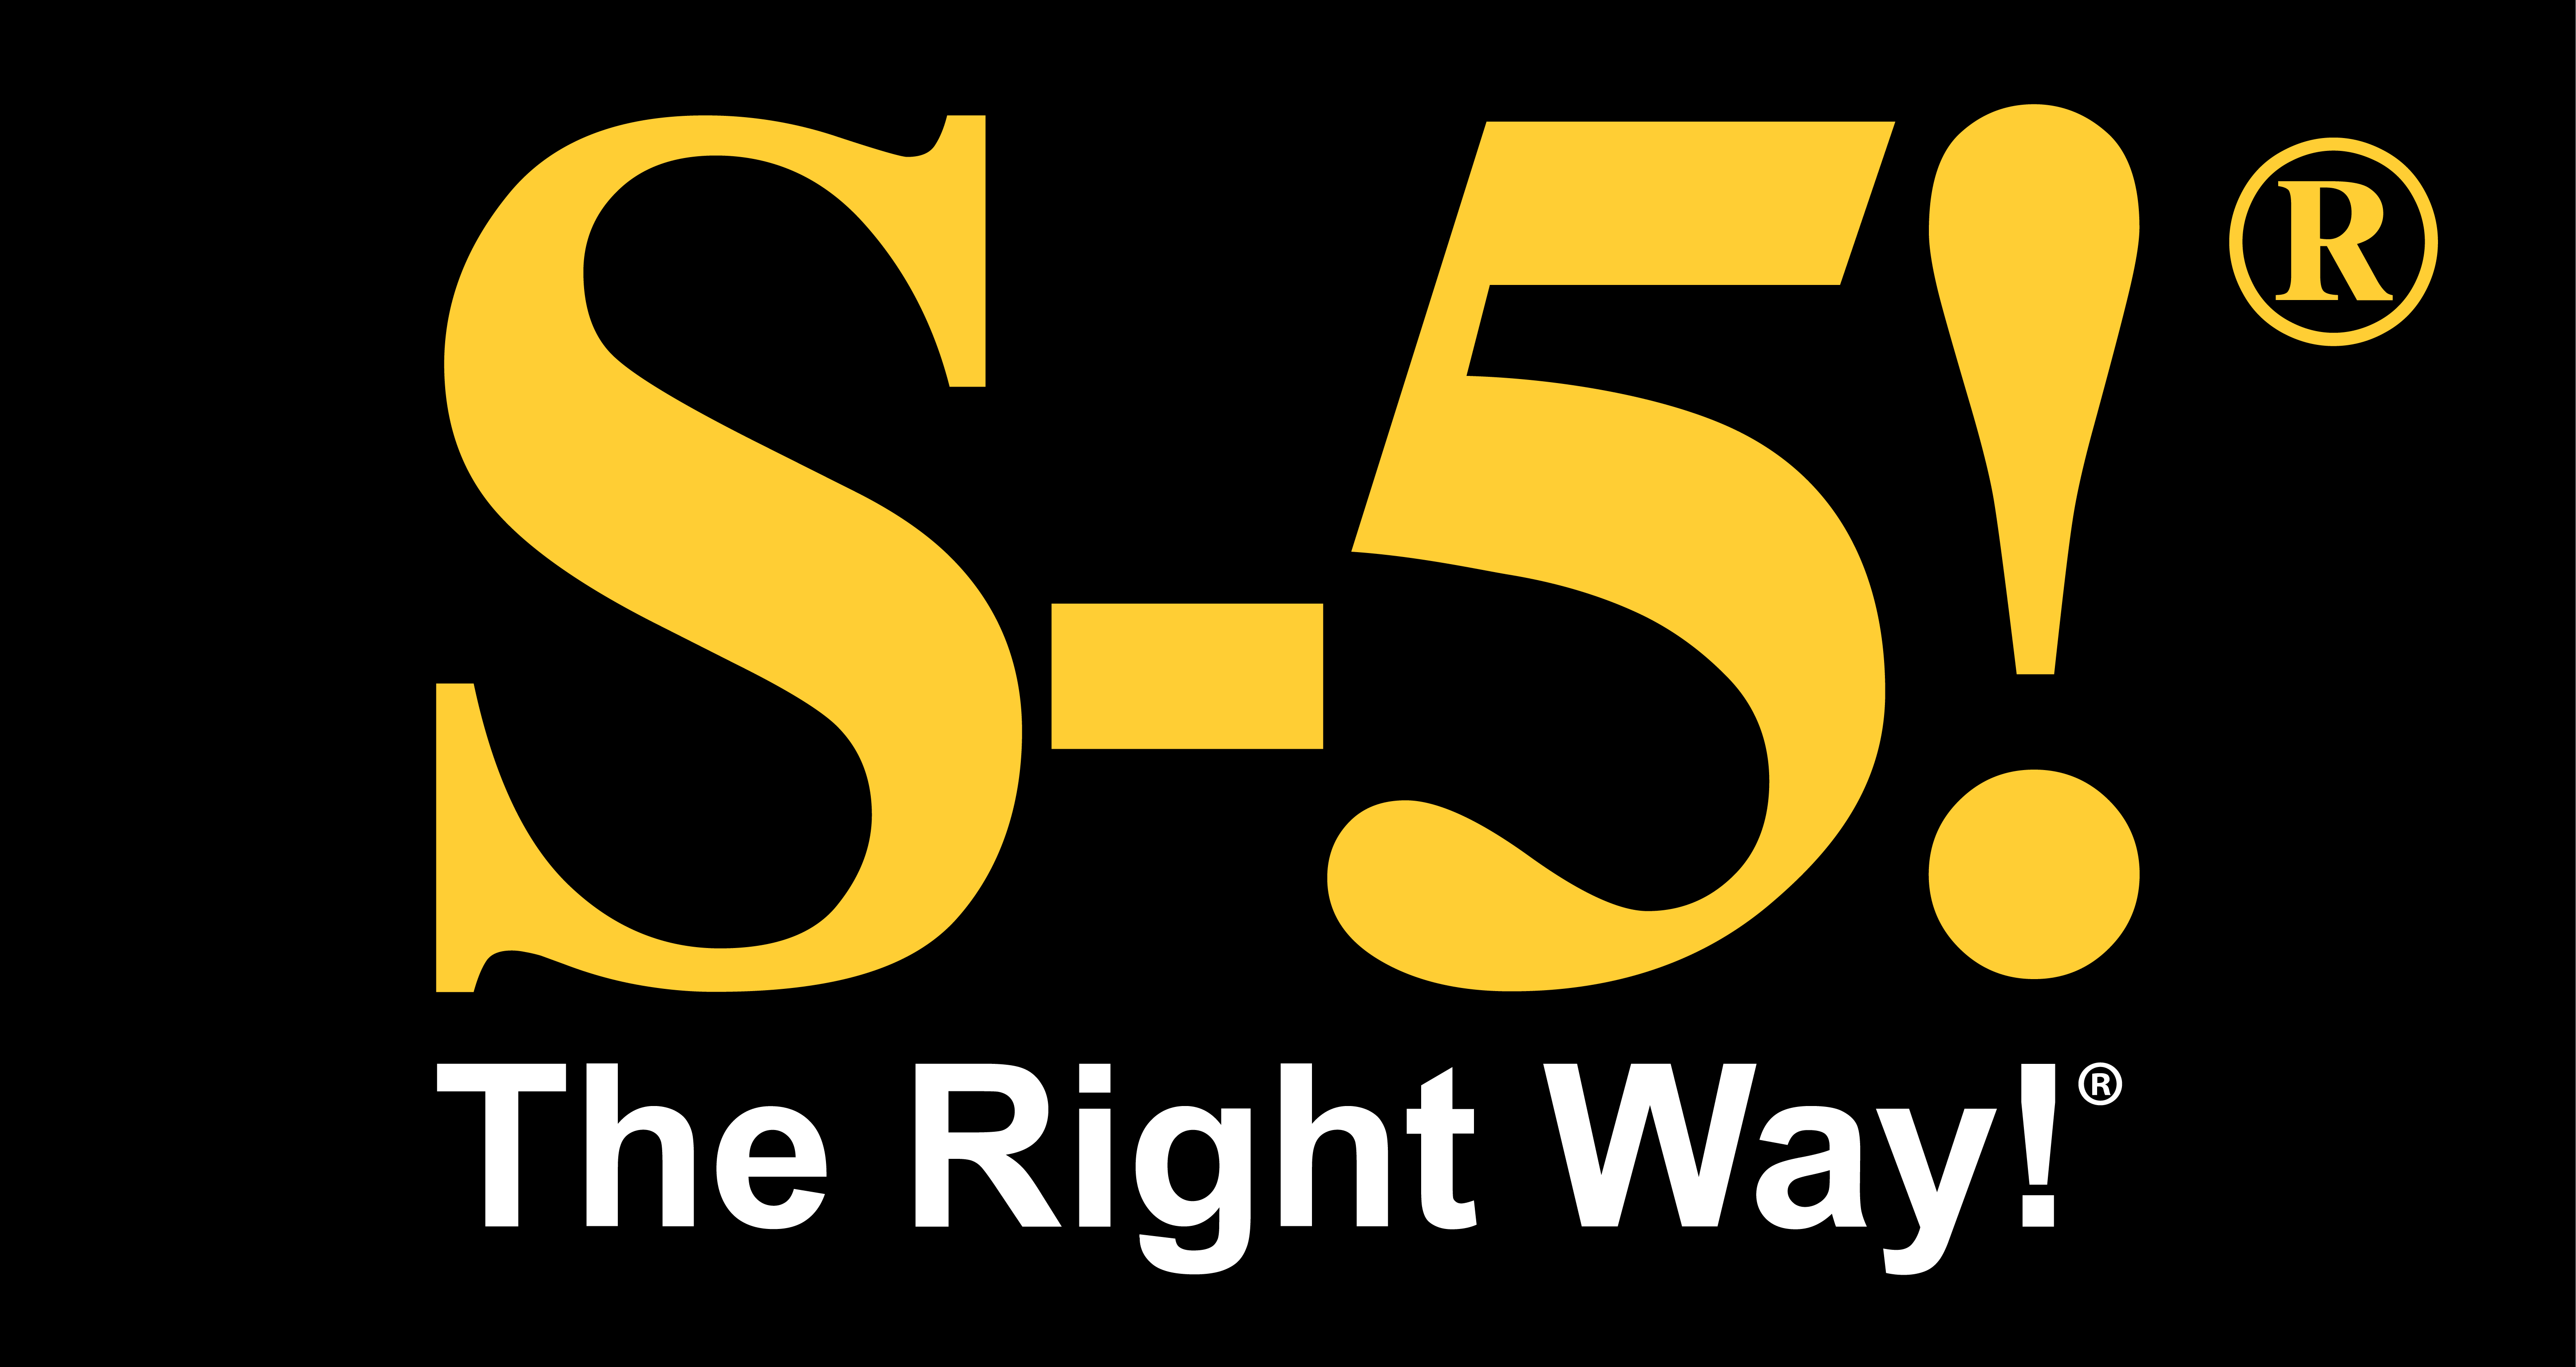 S-5! Celebrates its 30th Anniversary